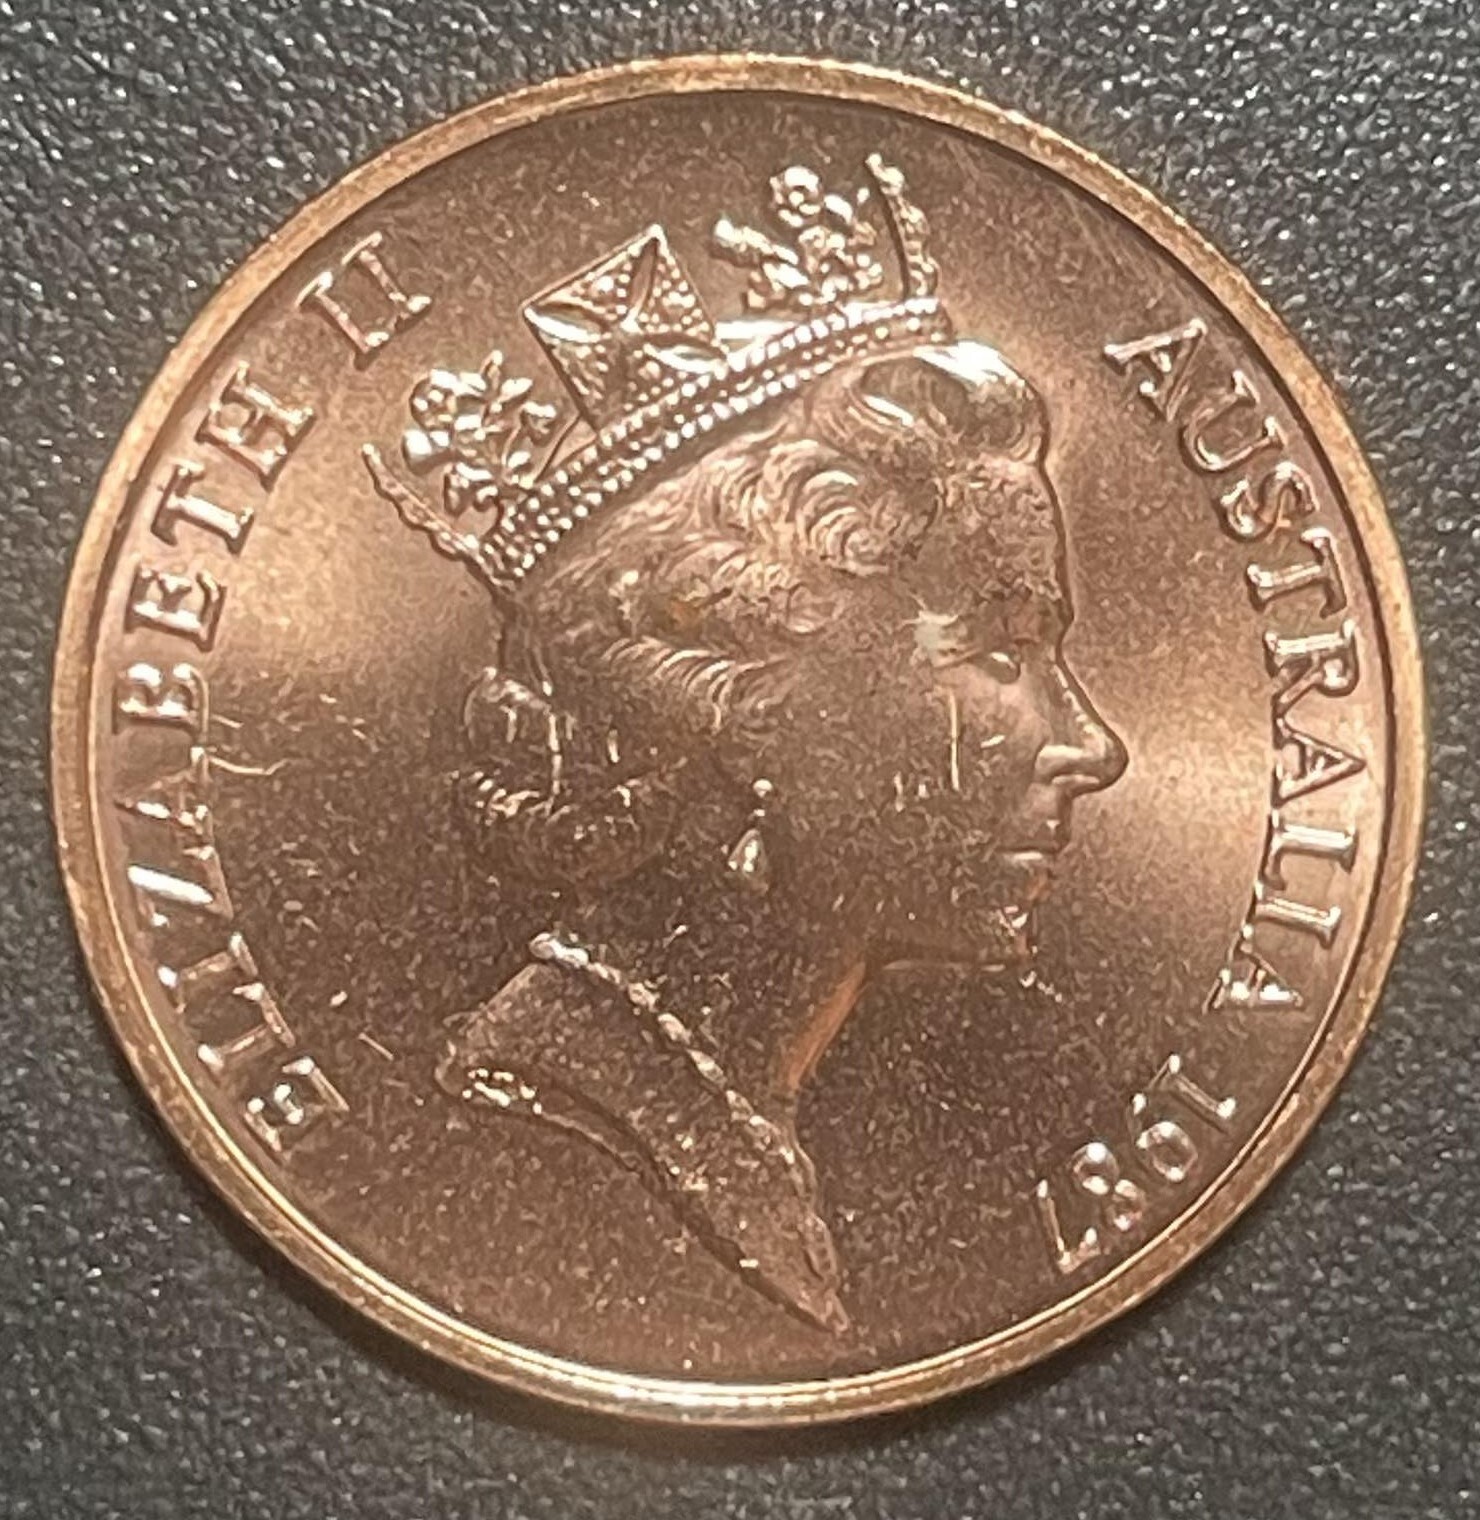 1987 2c Royal Australian Mint Uncirculated - Mint Set Year Only